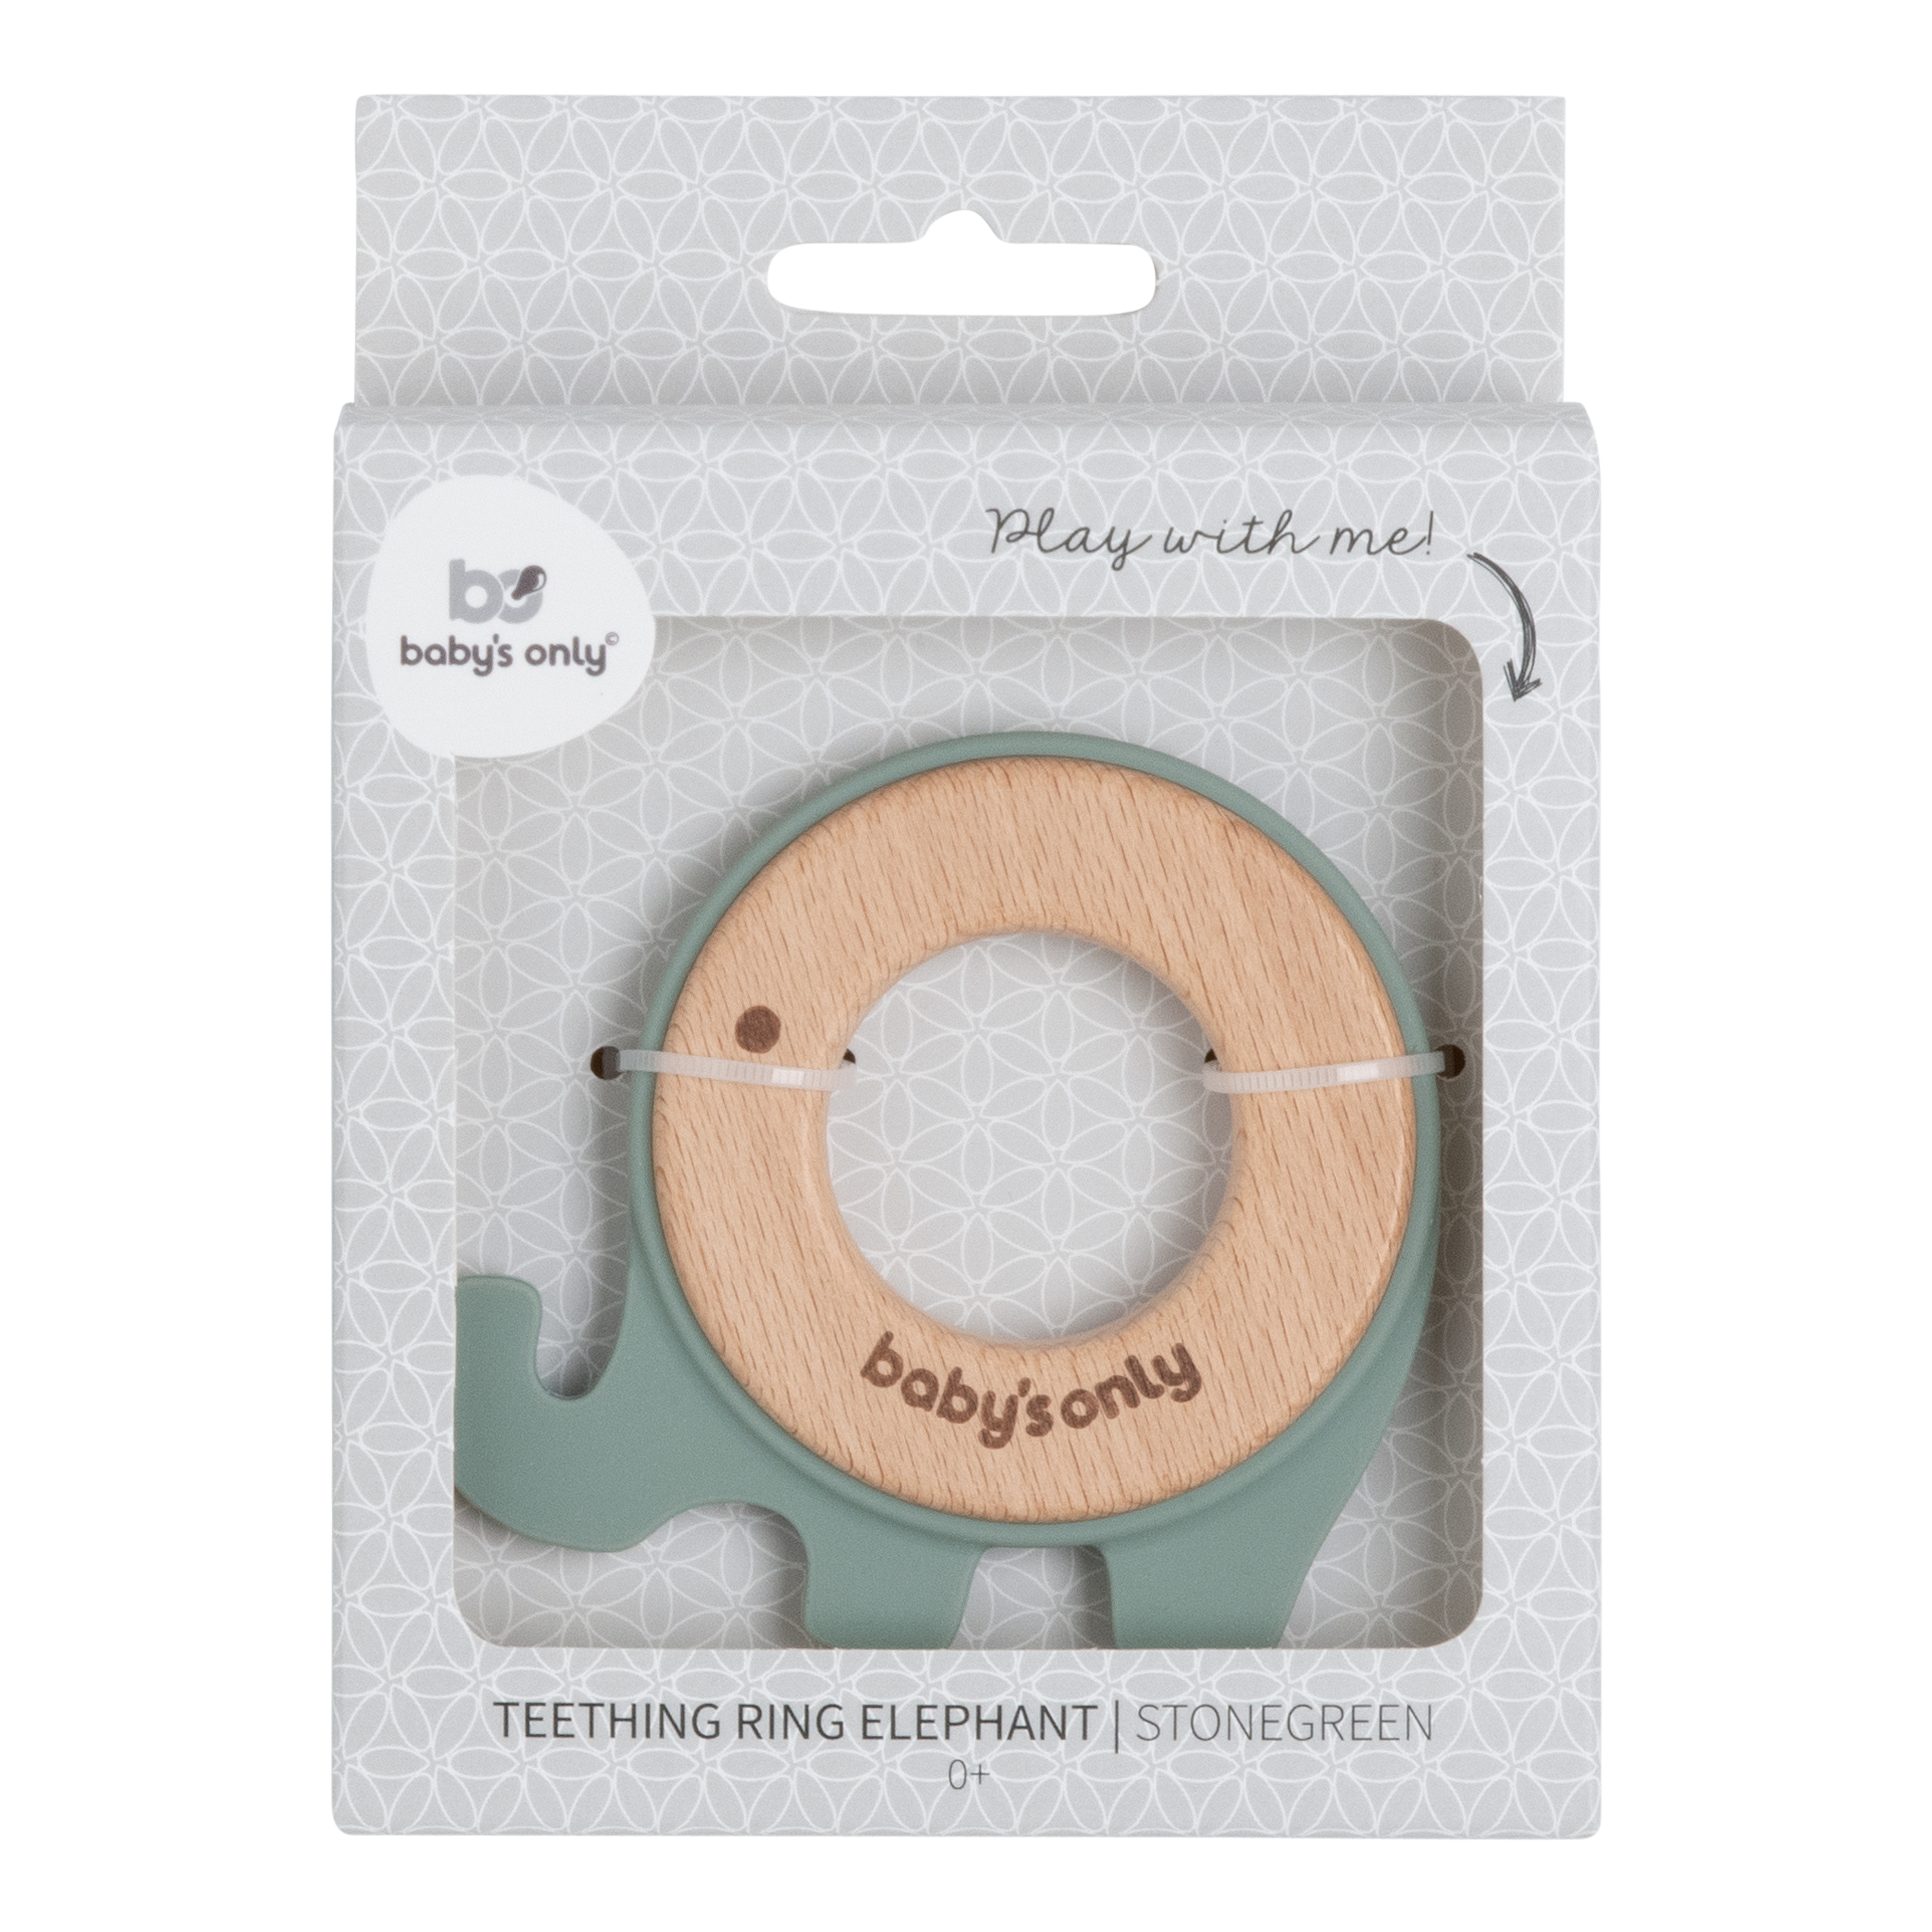 Teething ring elephant stonegreen